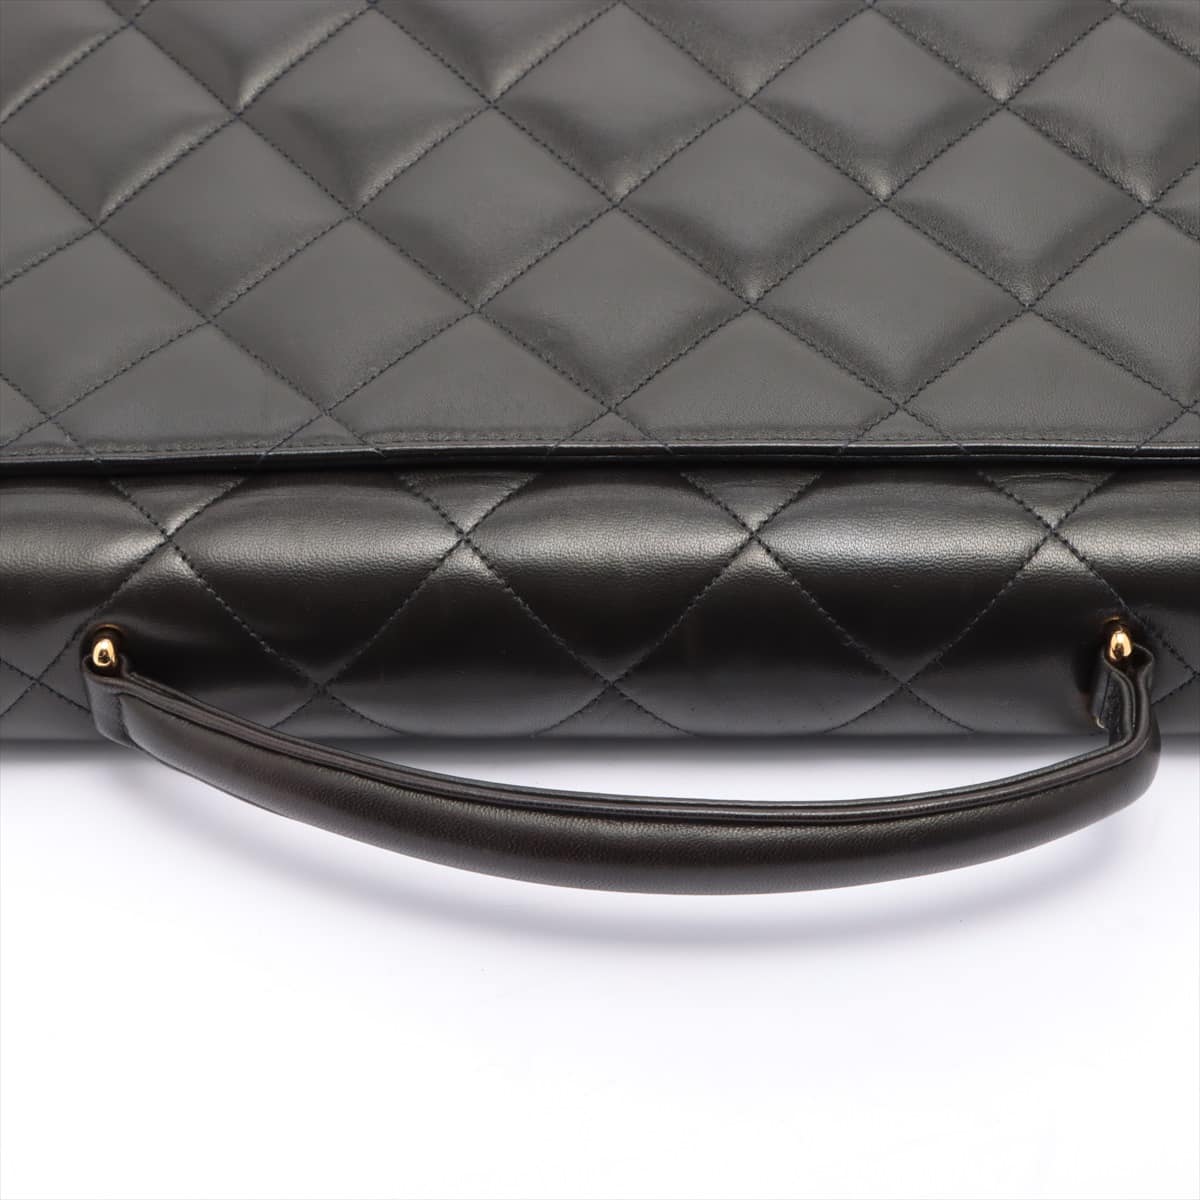 Chanel Matelasse Lambskin Business bag Black Gold Metal fittings 5XXXXXX